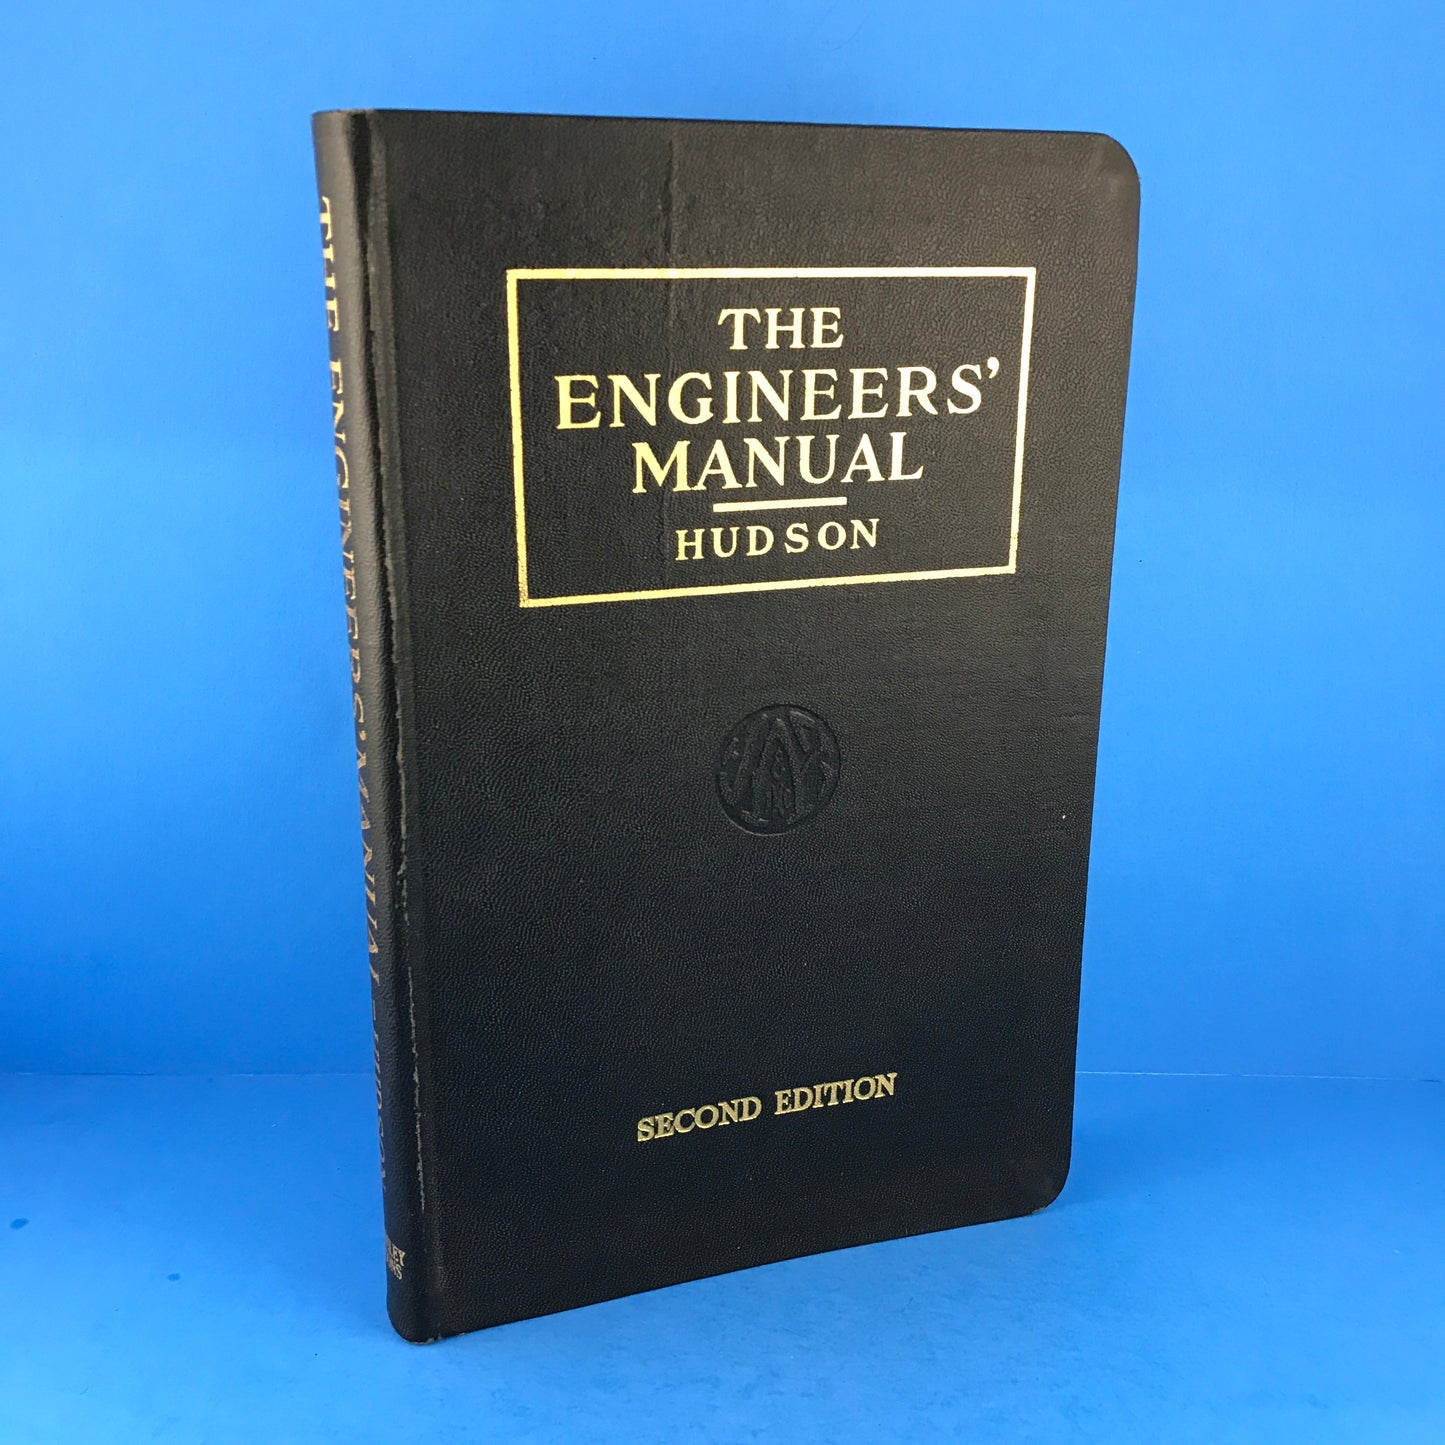 The Engineer's Manual